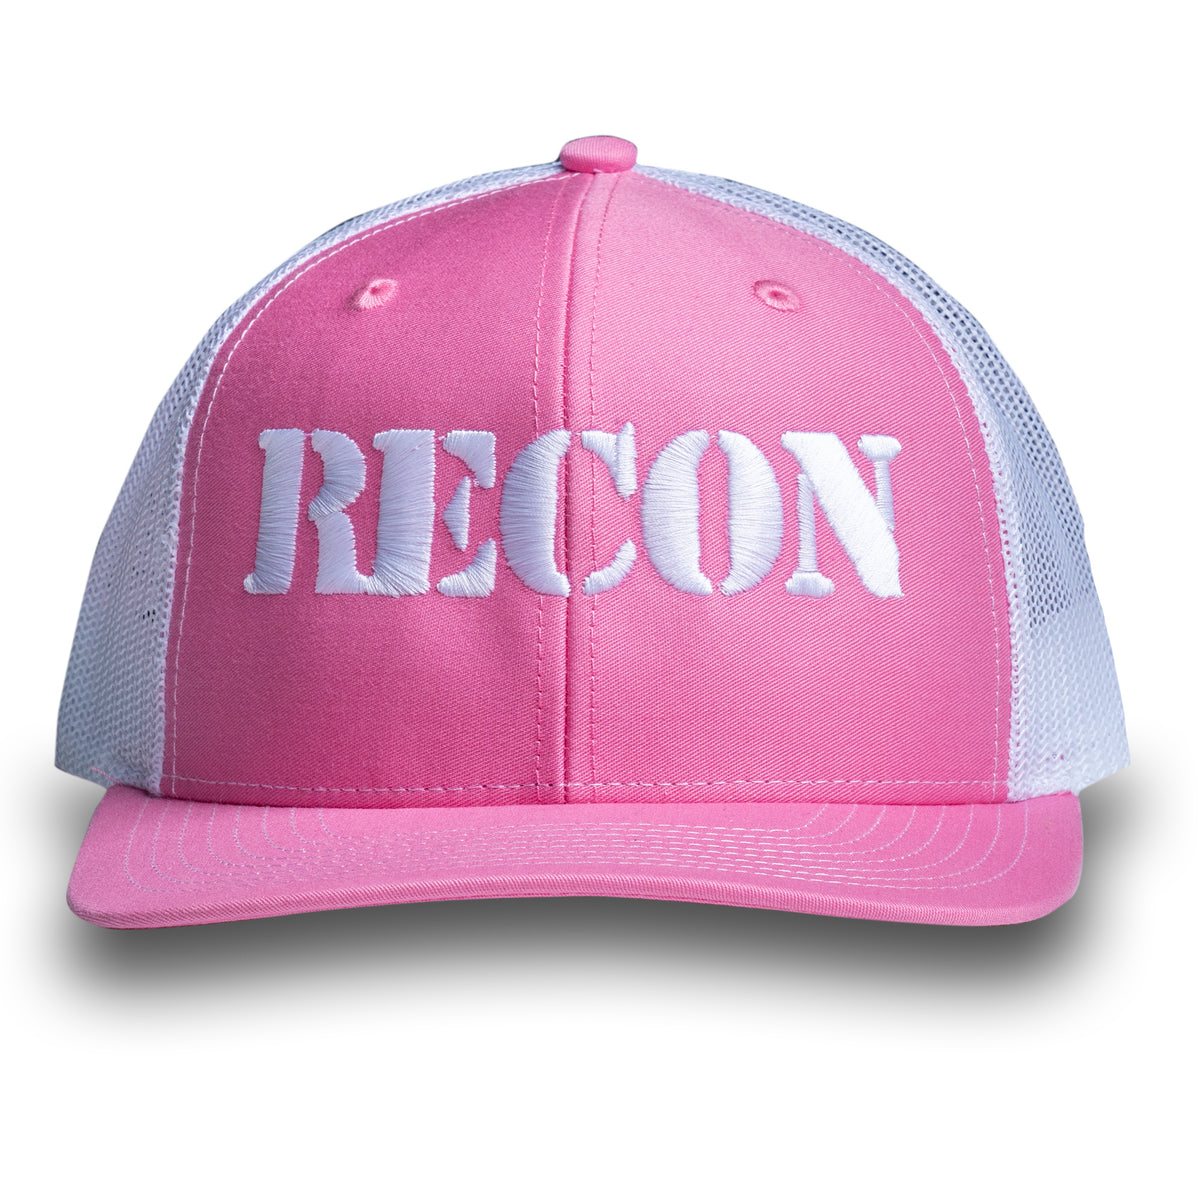 RECON Snapback Trucker Hat - Pink/White